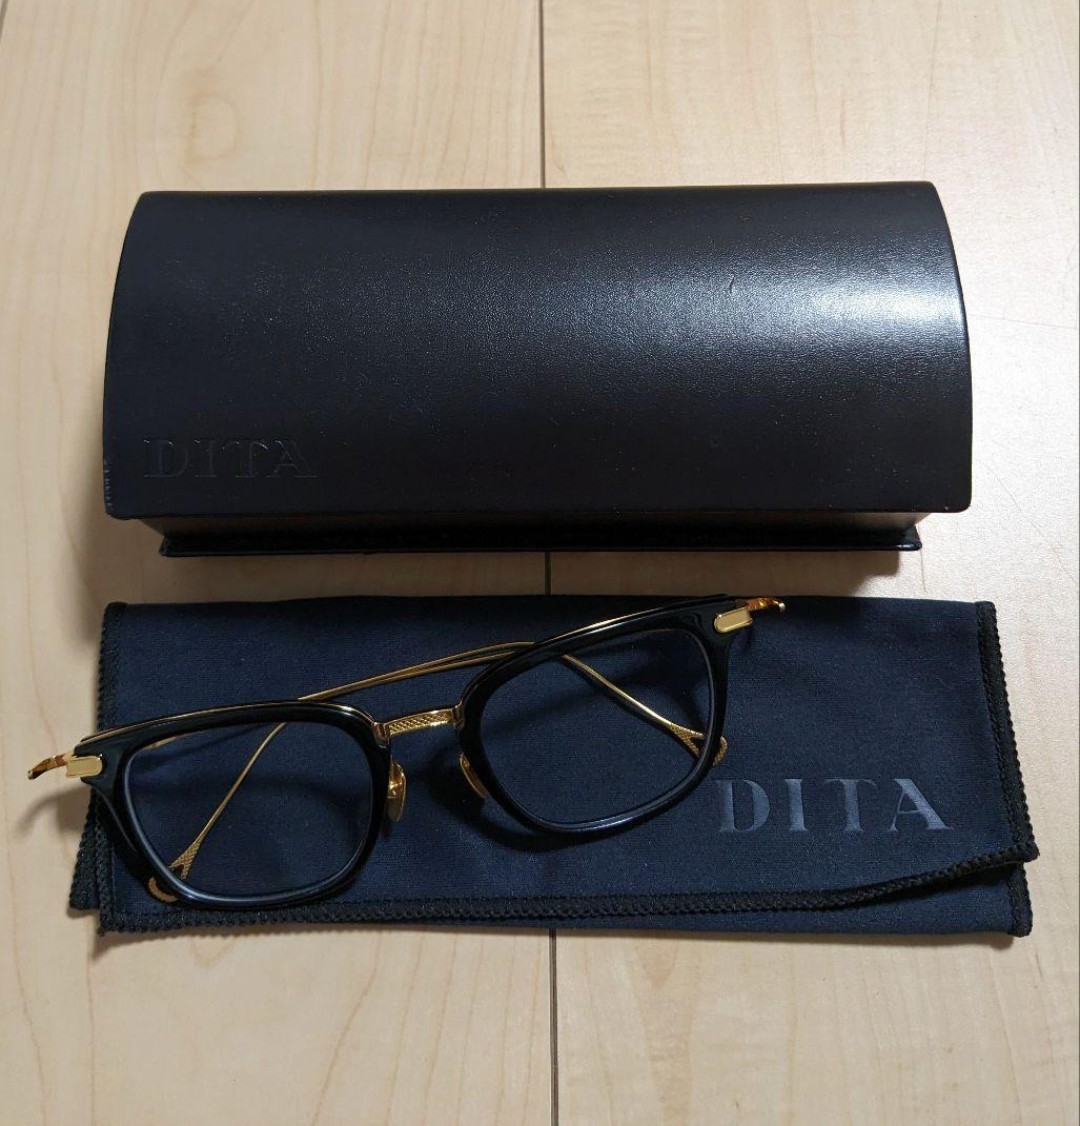 DITA STATESIDE DRX-2066-A-BLK-GLD-50 眼鏡 サングラス メガネ フレーム 日本製 ディータ ステーツサイド DRX-2066